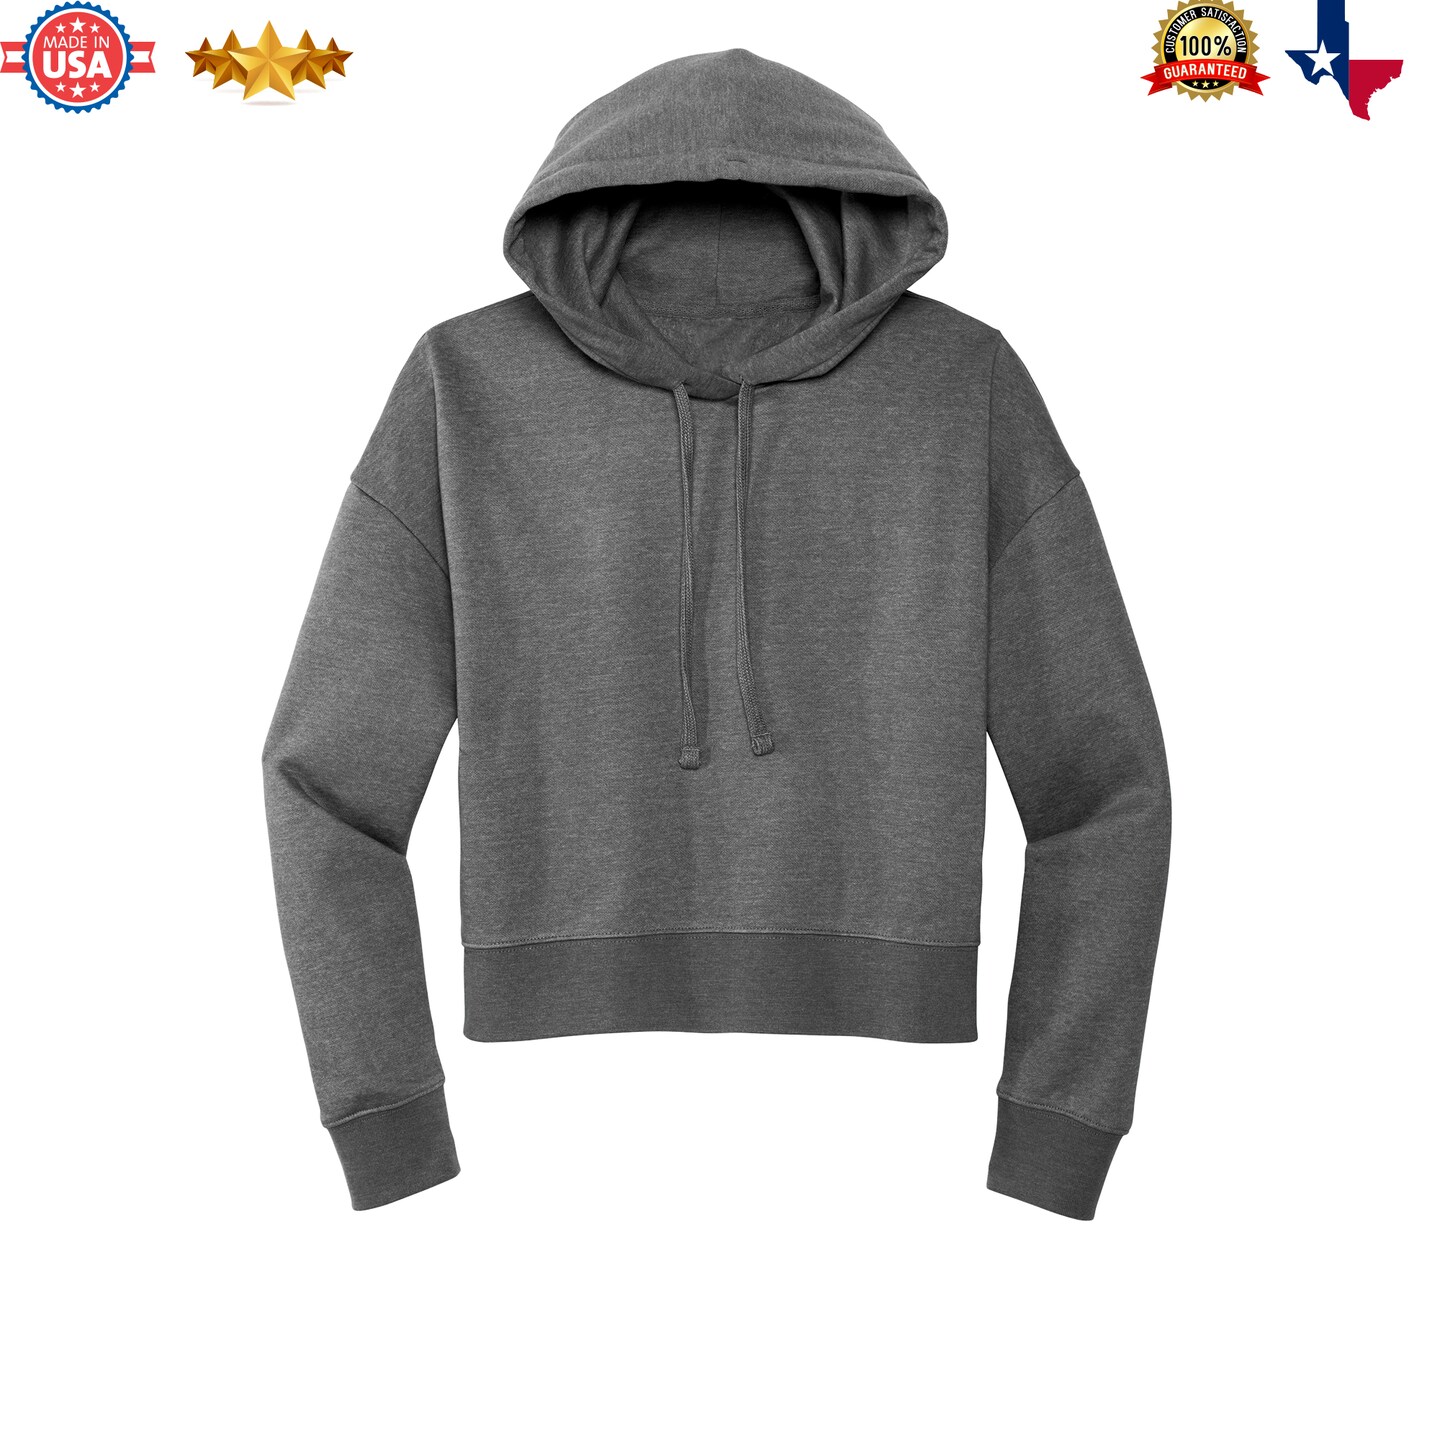 Buy Soft Ultimate Zip-Up Jacket - Order Hoodies & Sweatshirts